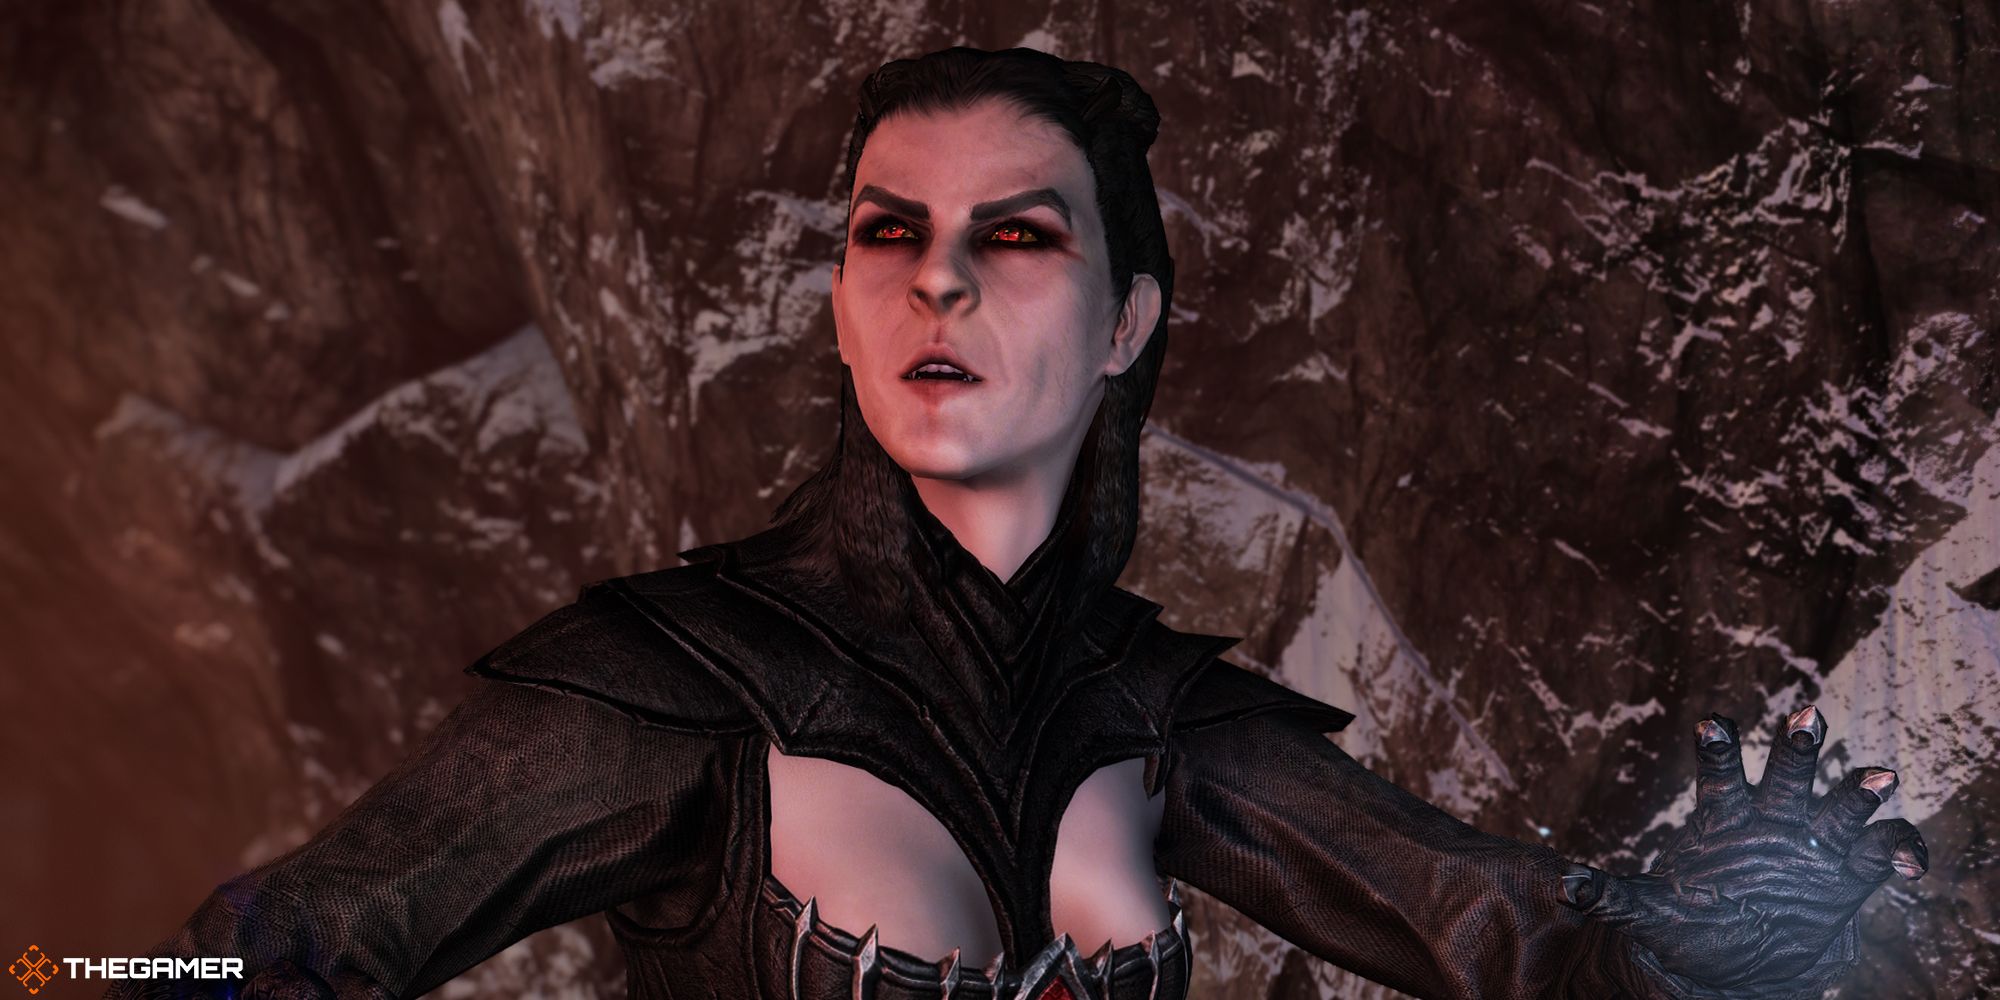 Skyrim - female vampire promo image for expanded vampire voicelines